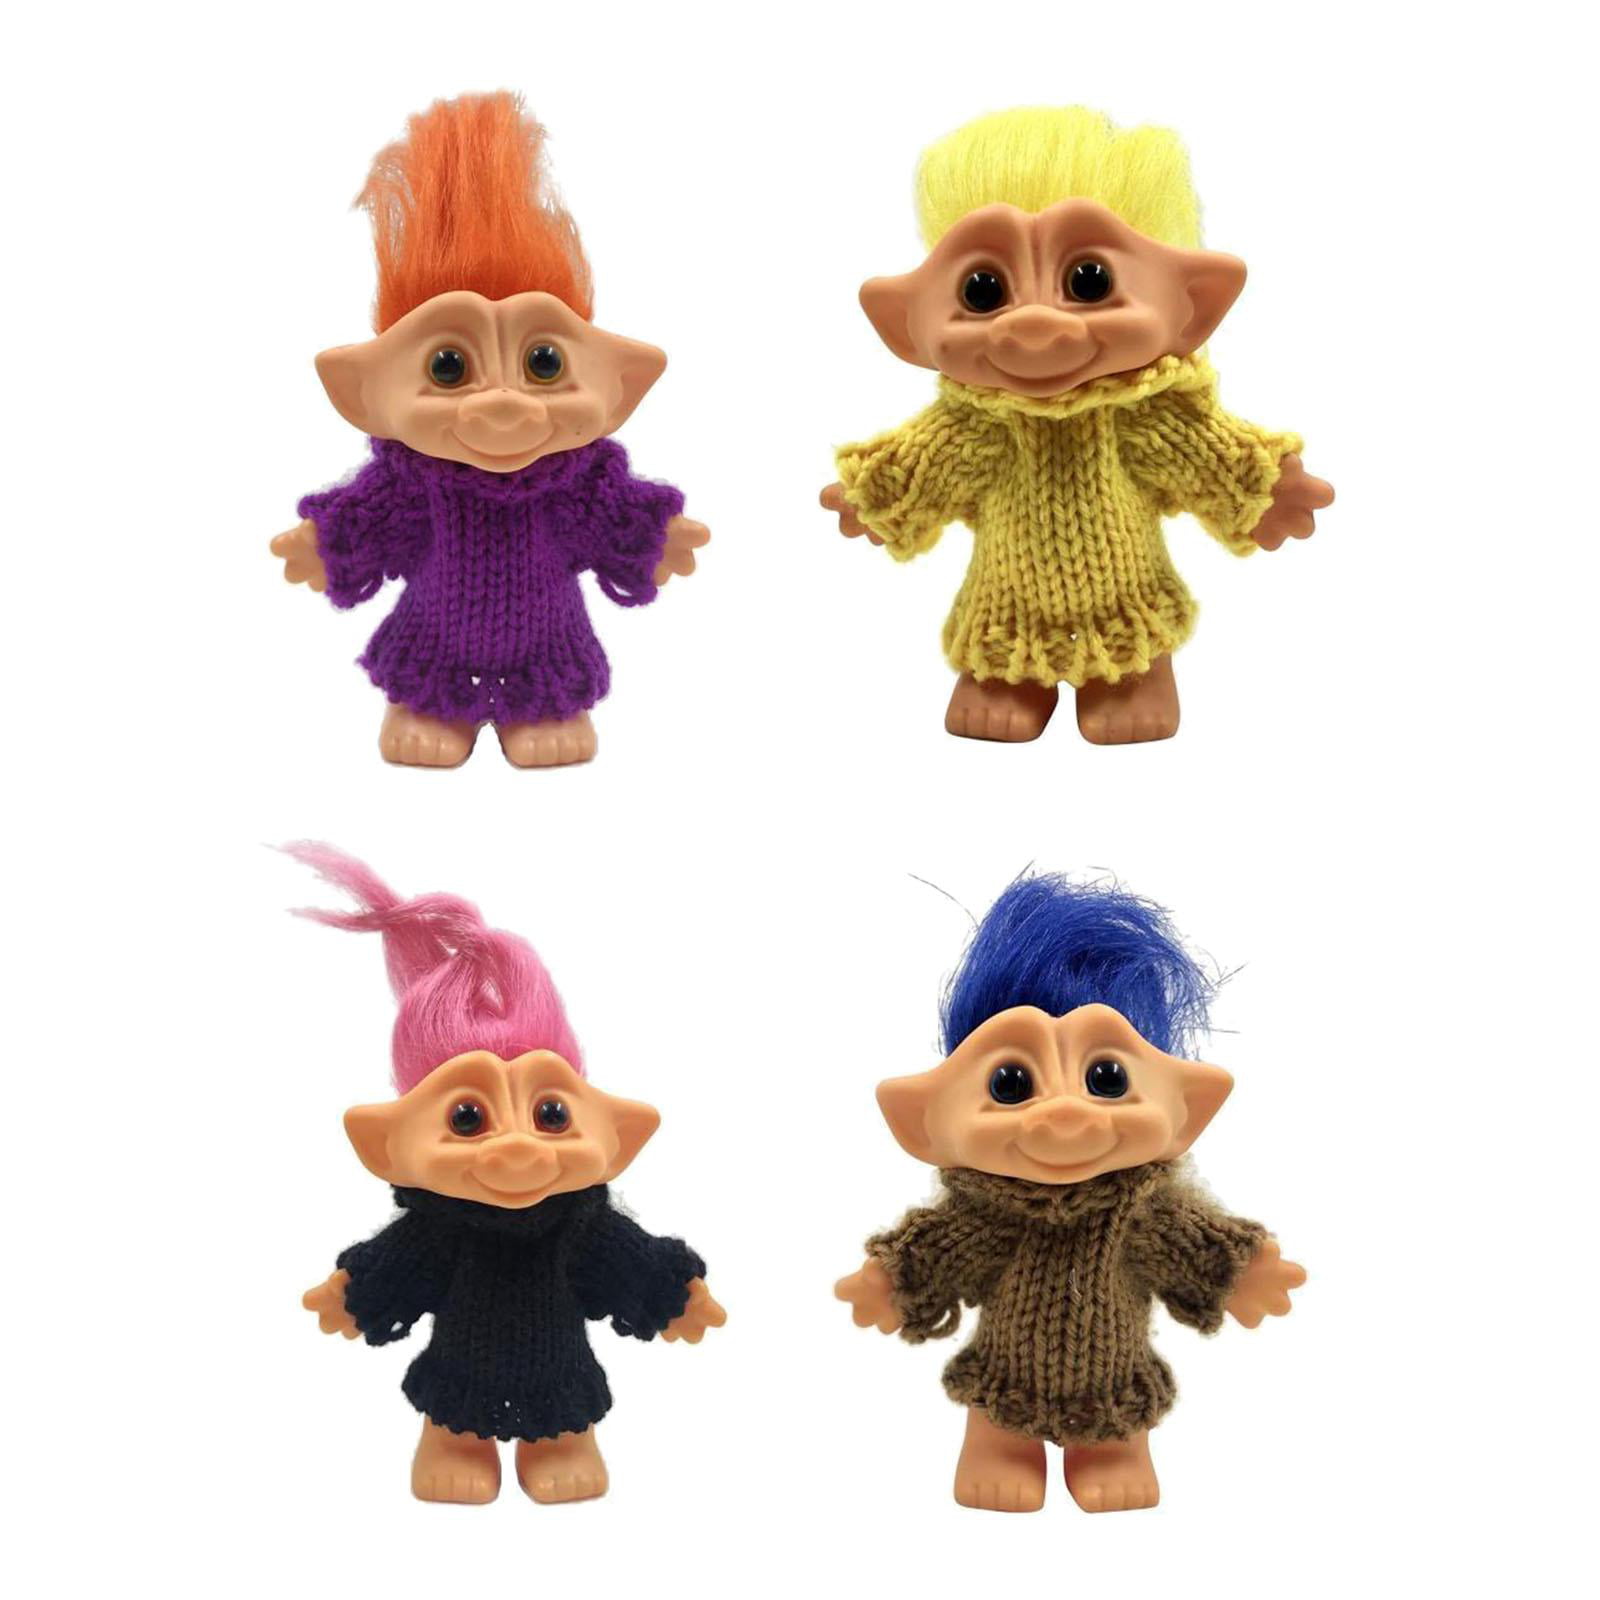 Retro Trolls Doll Mini Figures Trolls Figures Kids Party Bag Filler Fun Loot UK 